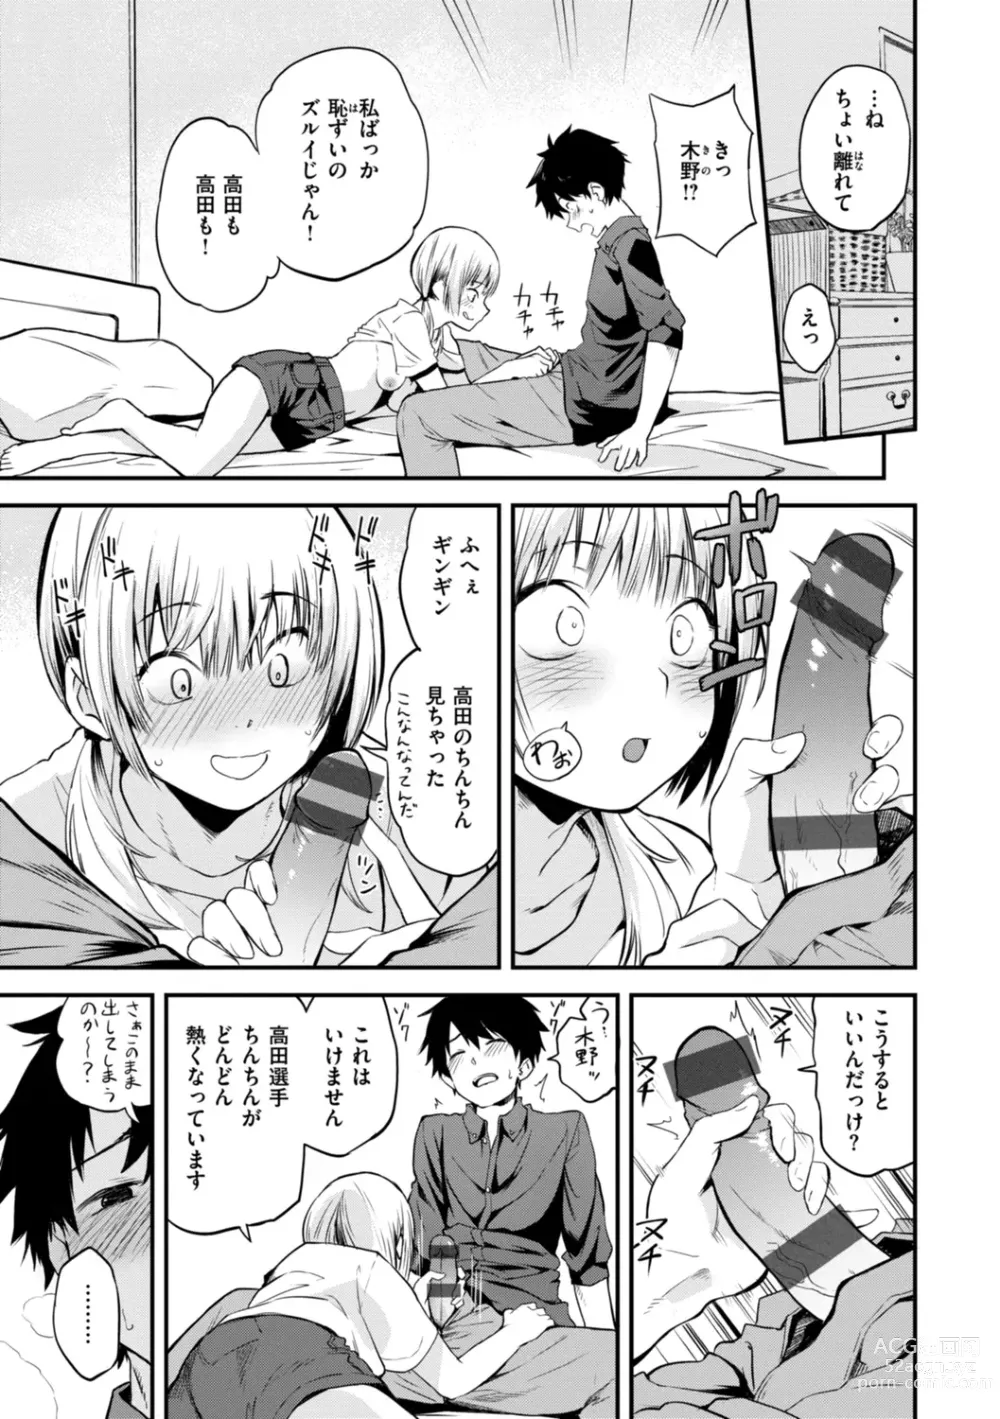 Page 13 of manga Jaa, Ecchi Shichau? - Shall we have H then?